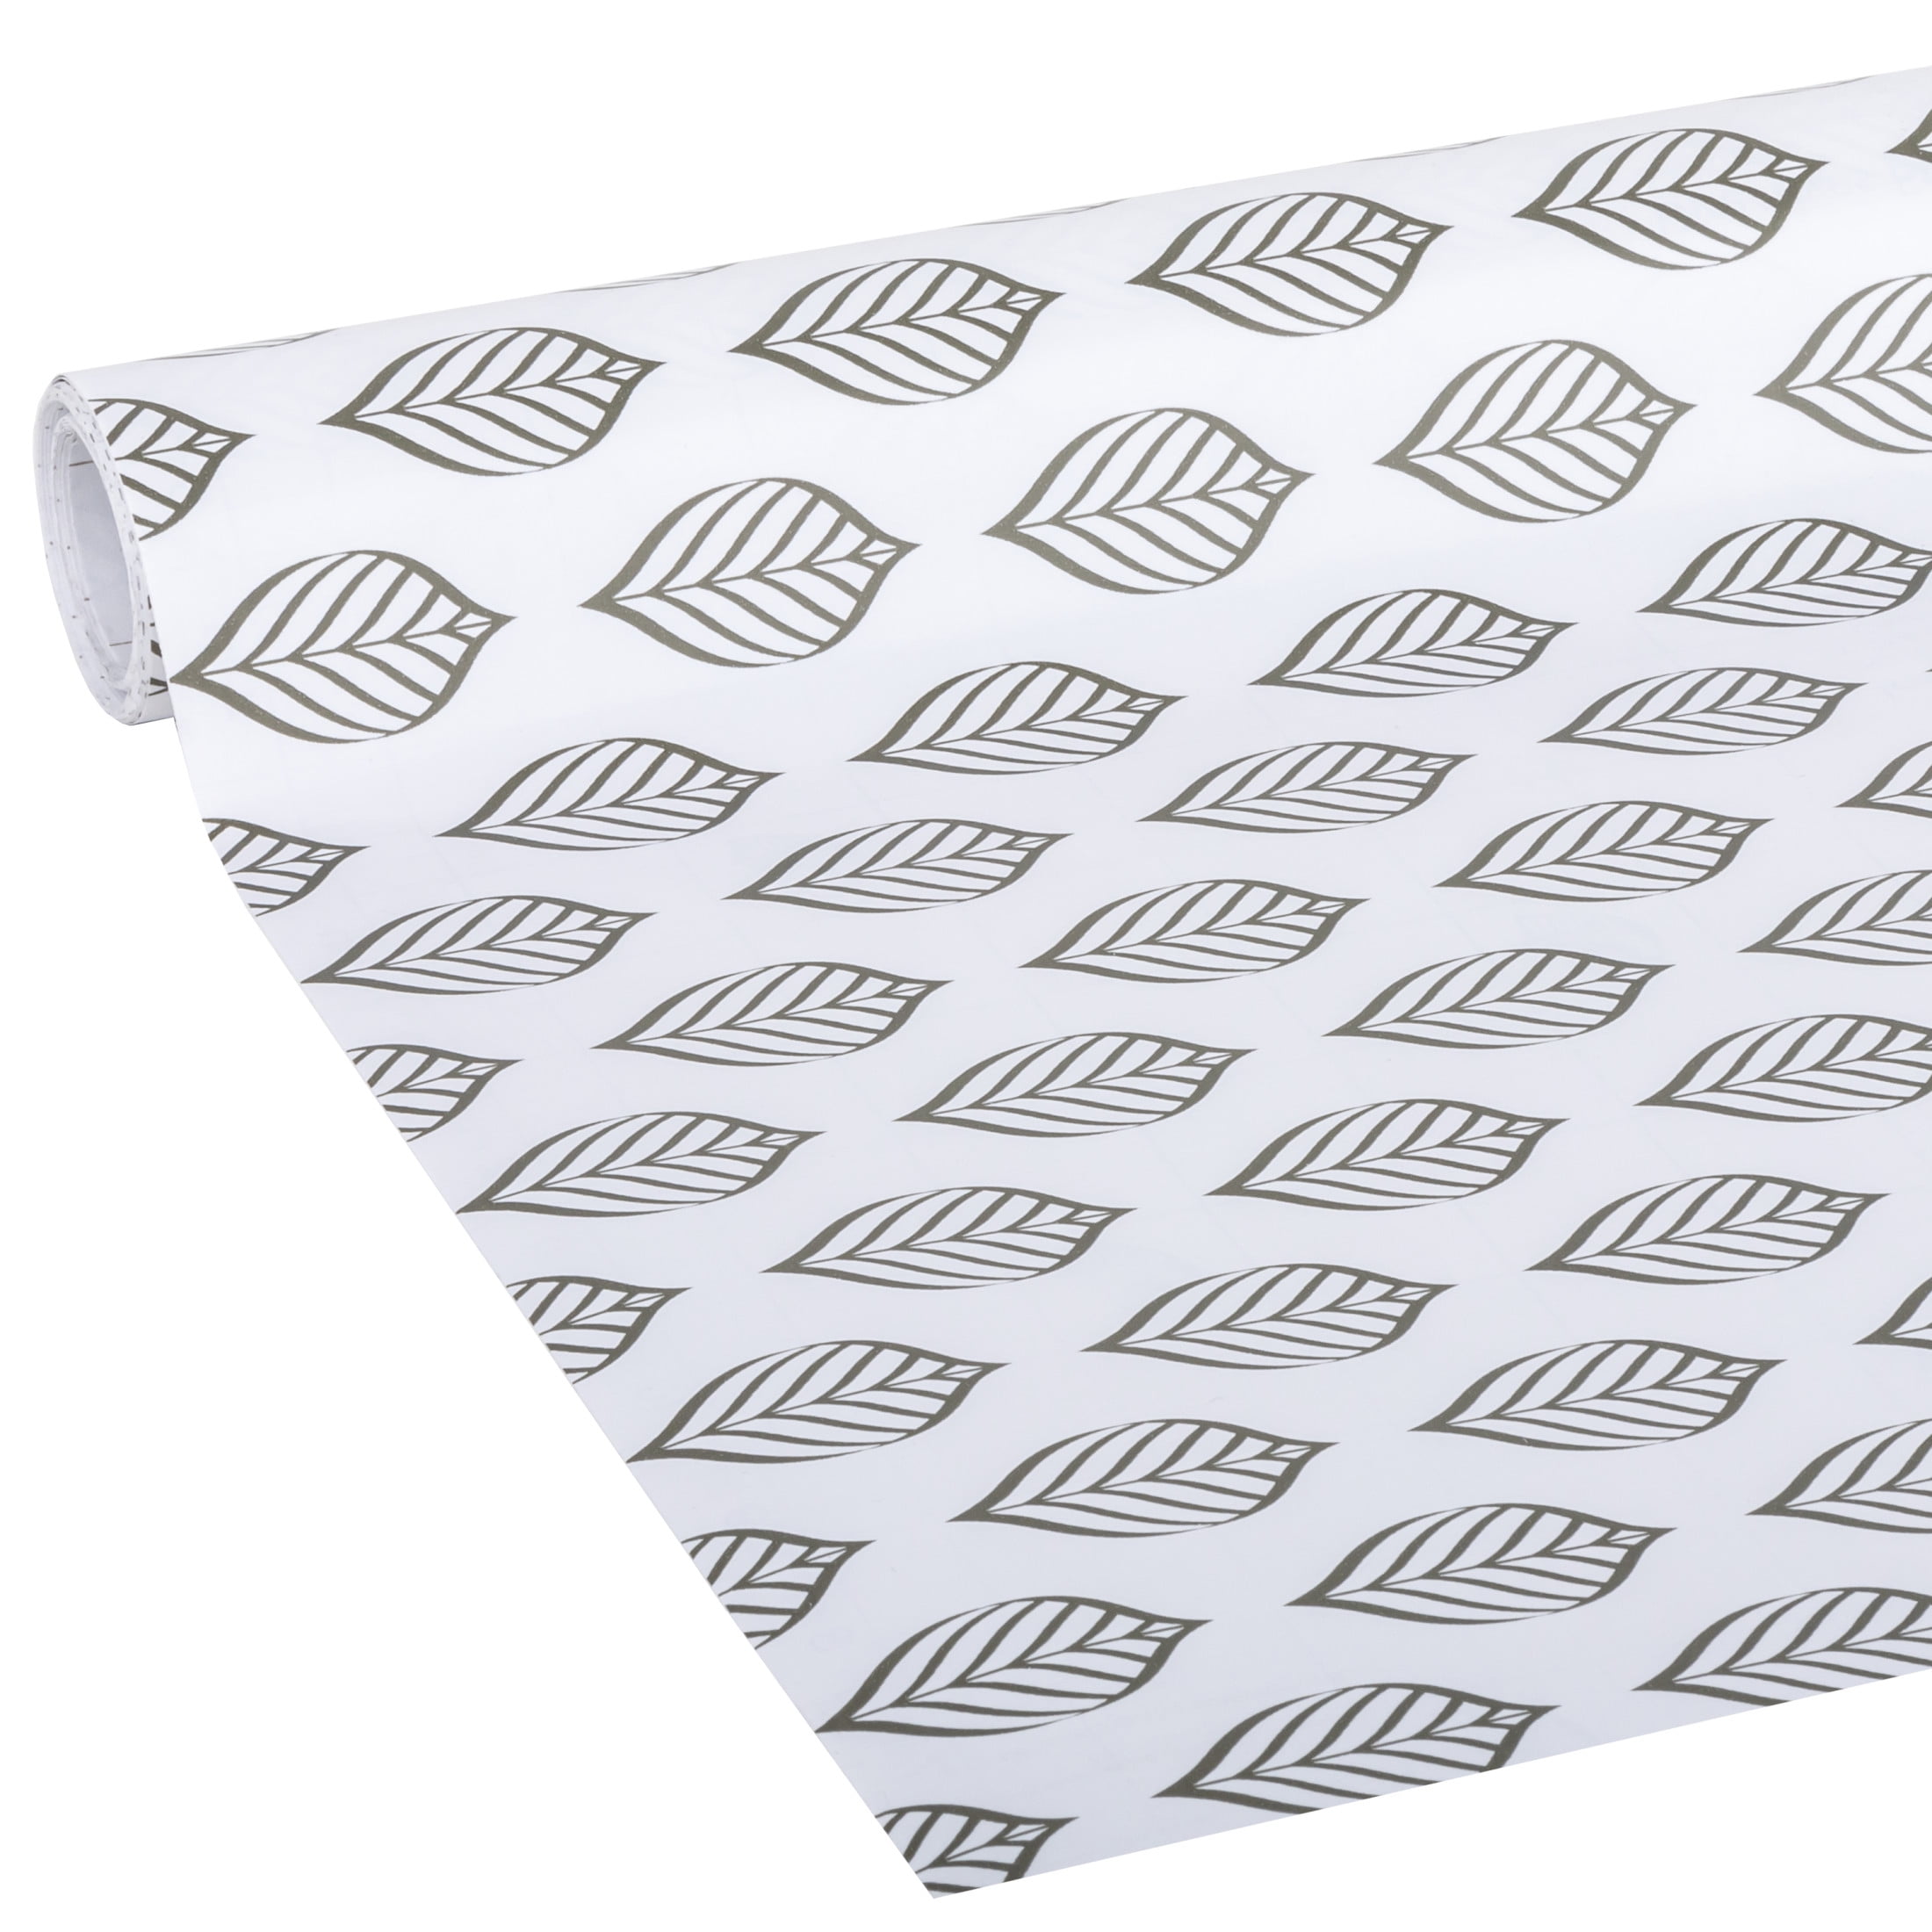 EasyLiner Brand Contact Paper Adhesive Shelf Liner 20 in. x 15 ft., Oak 